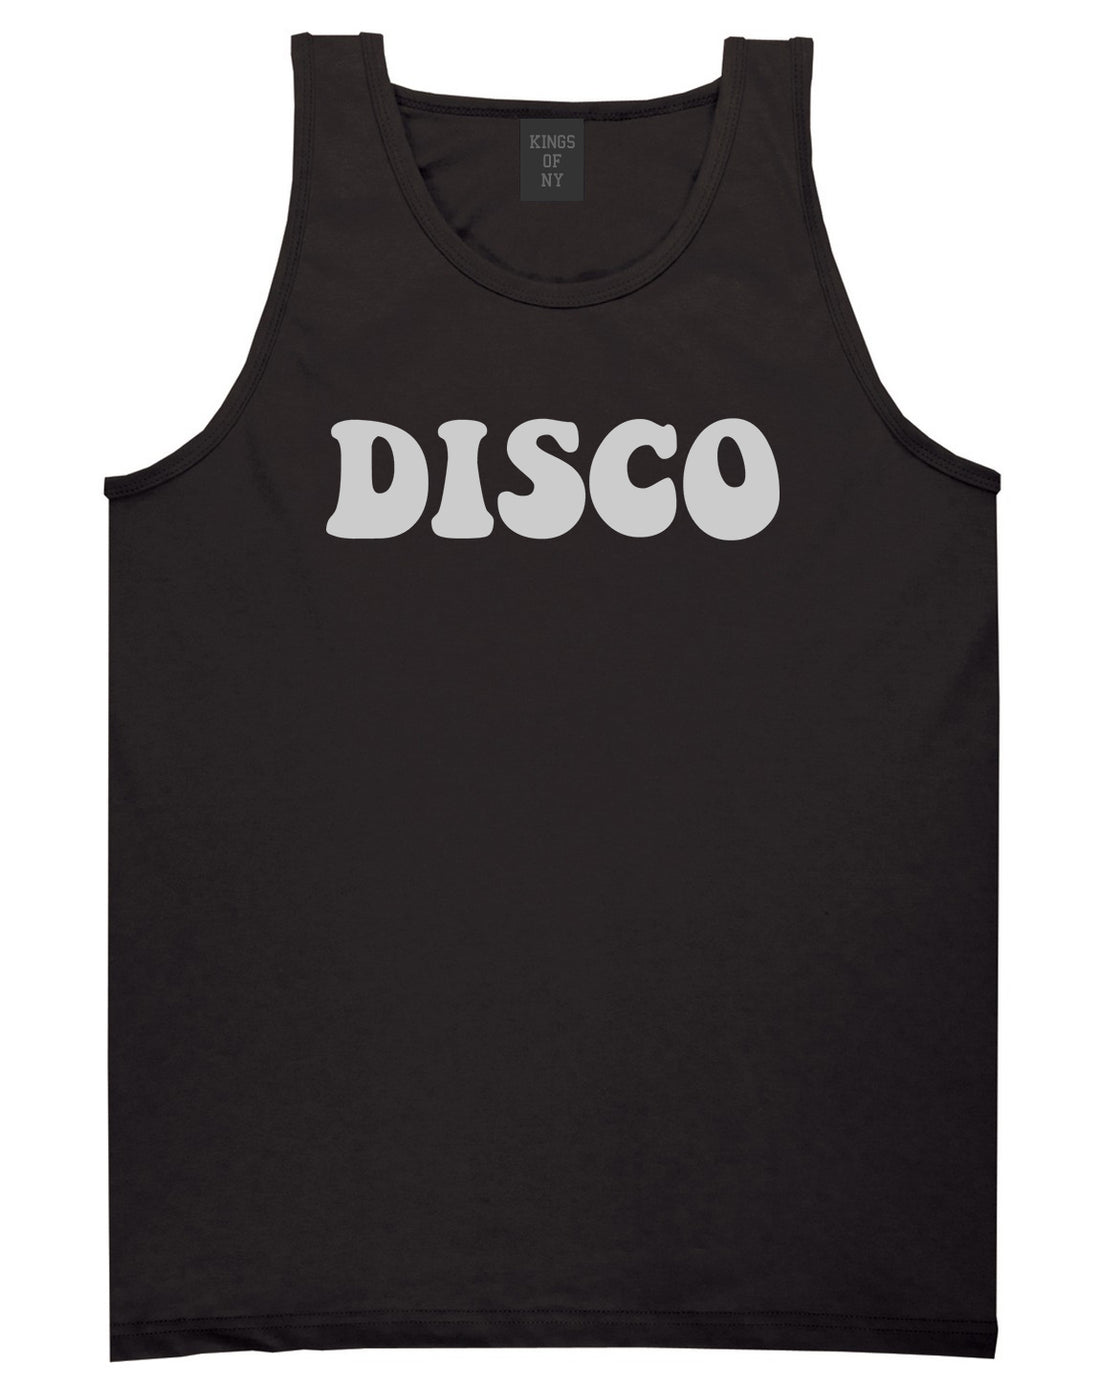 Disco_Music Mens Black Tank Top Shirt by Kings Of NY